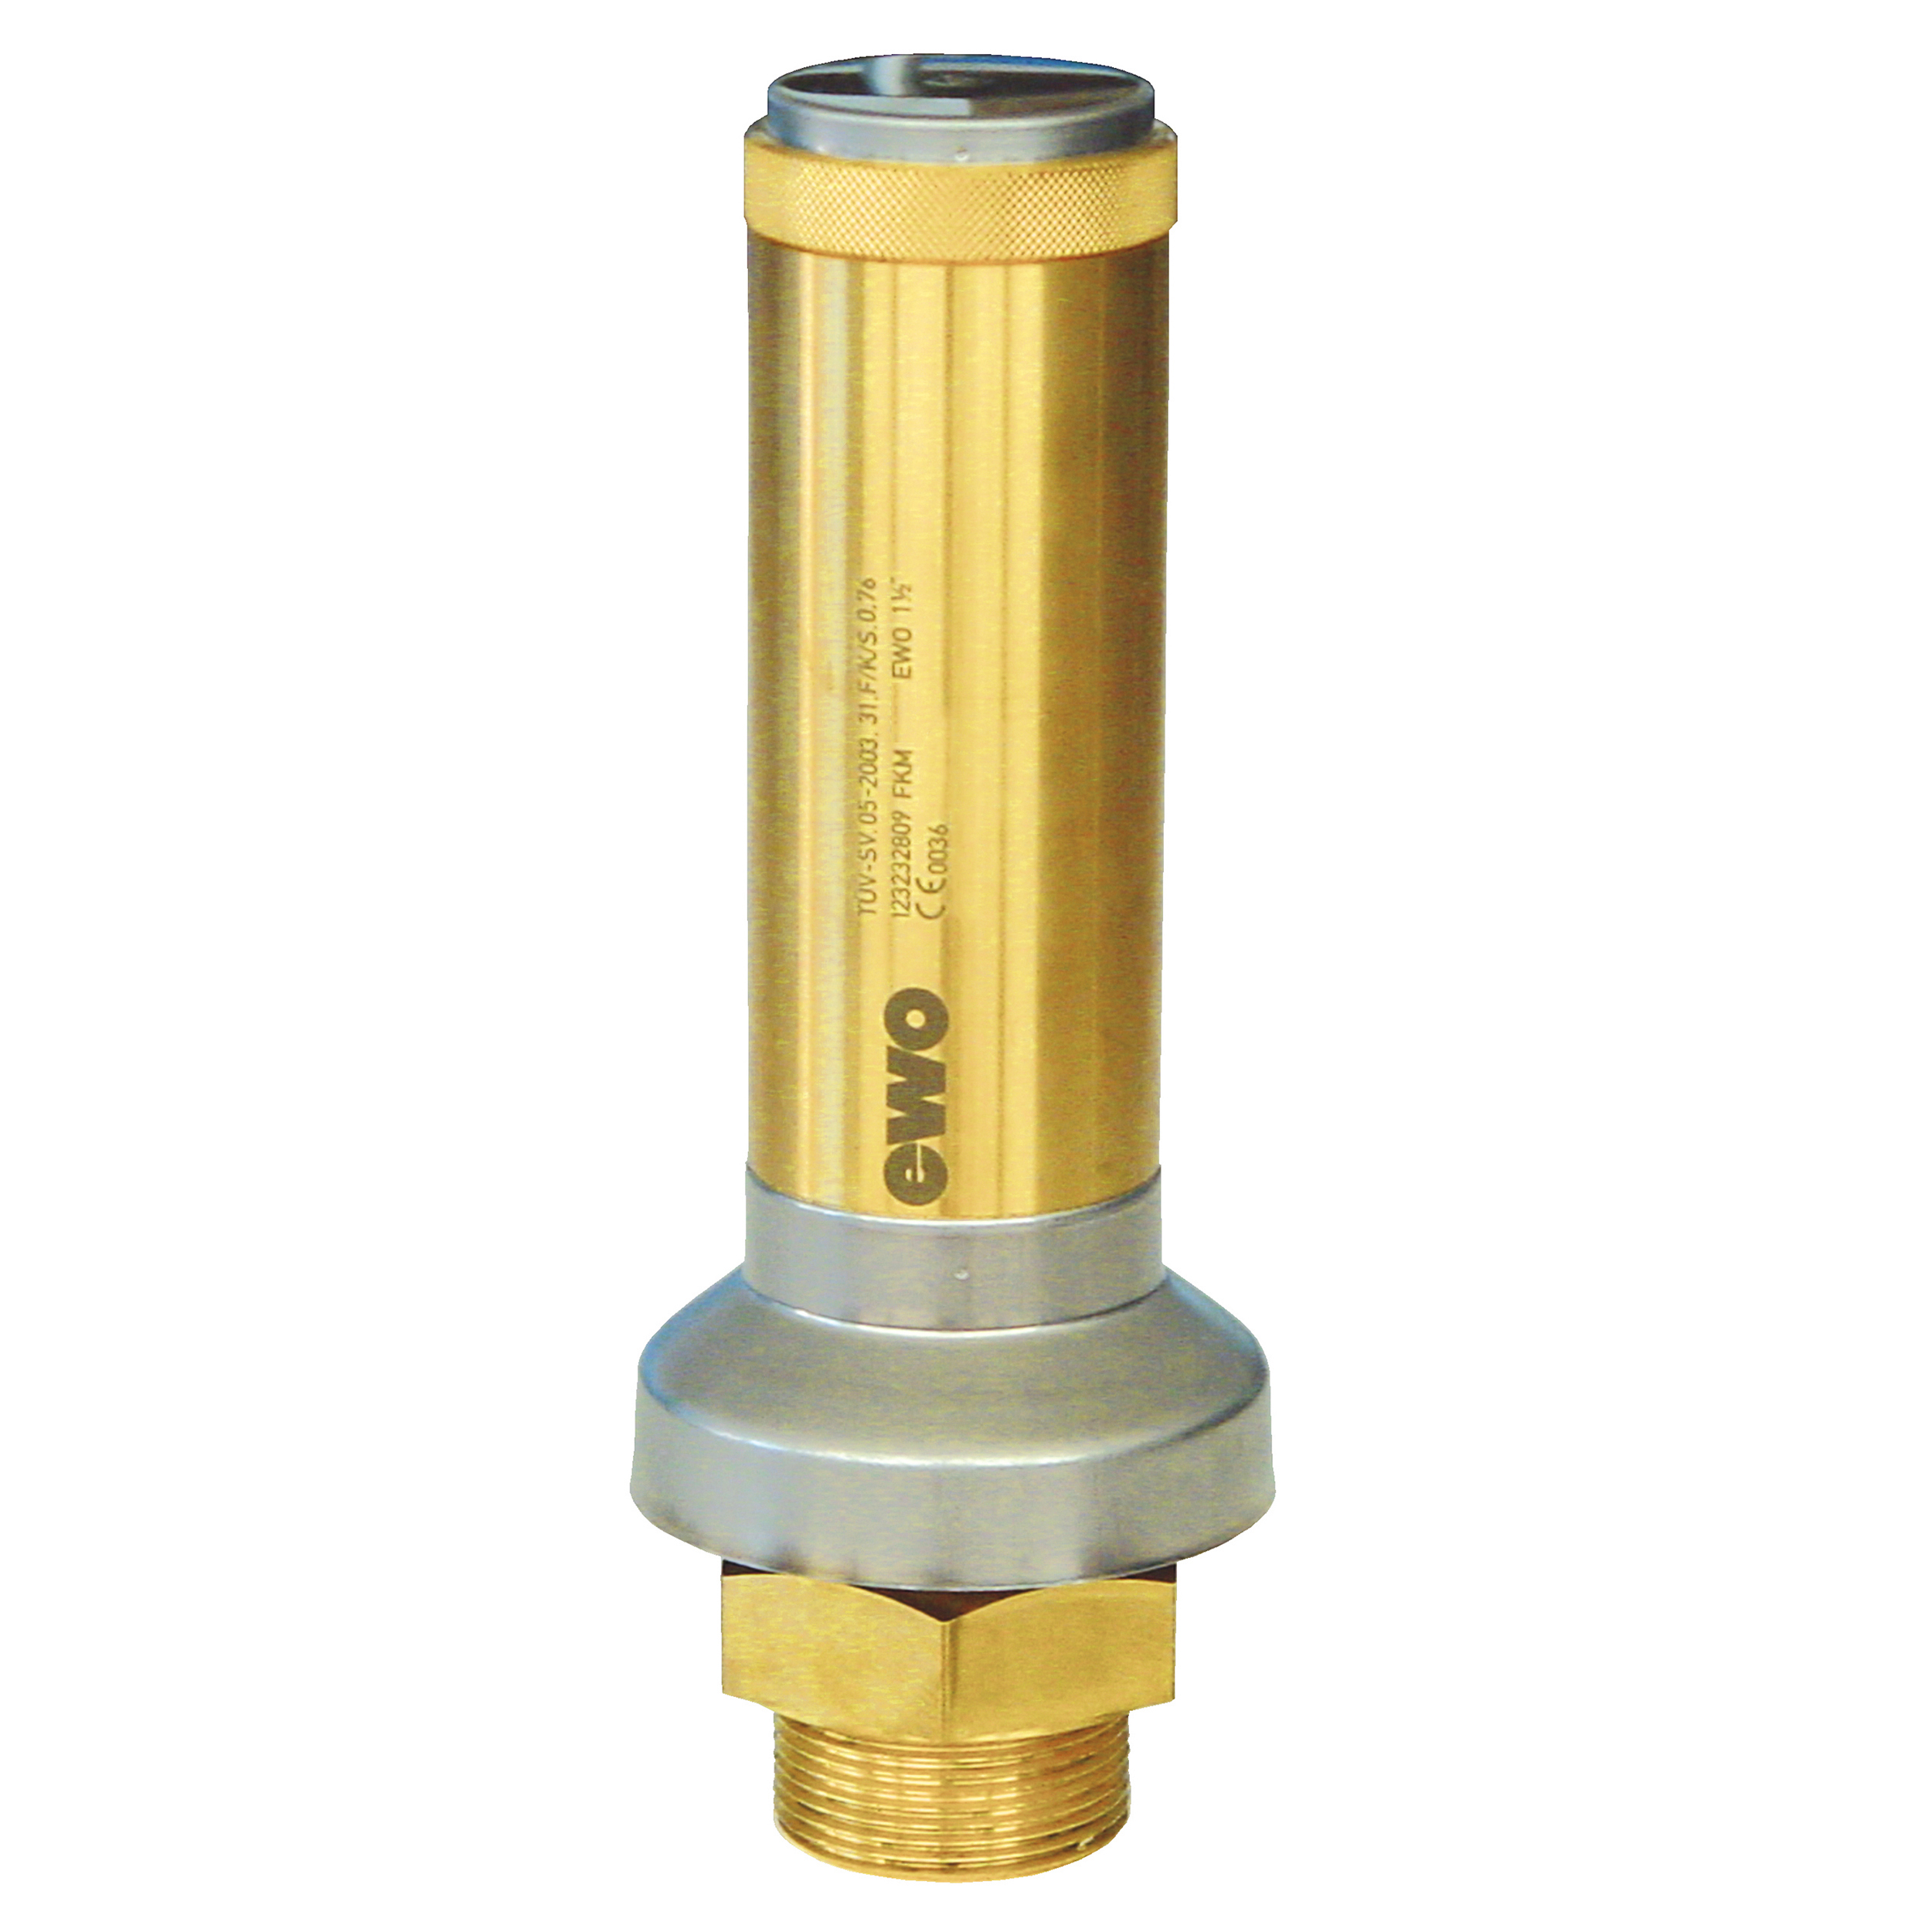 Savety valve component tested, F/K/S, G2, DN 48, L: 215 mm, seal: FKM, set pressure 2.0–6 bar